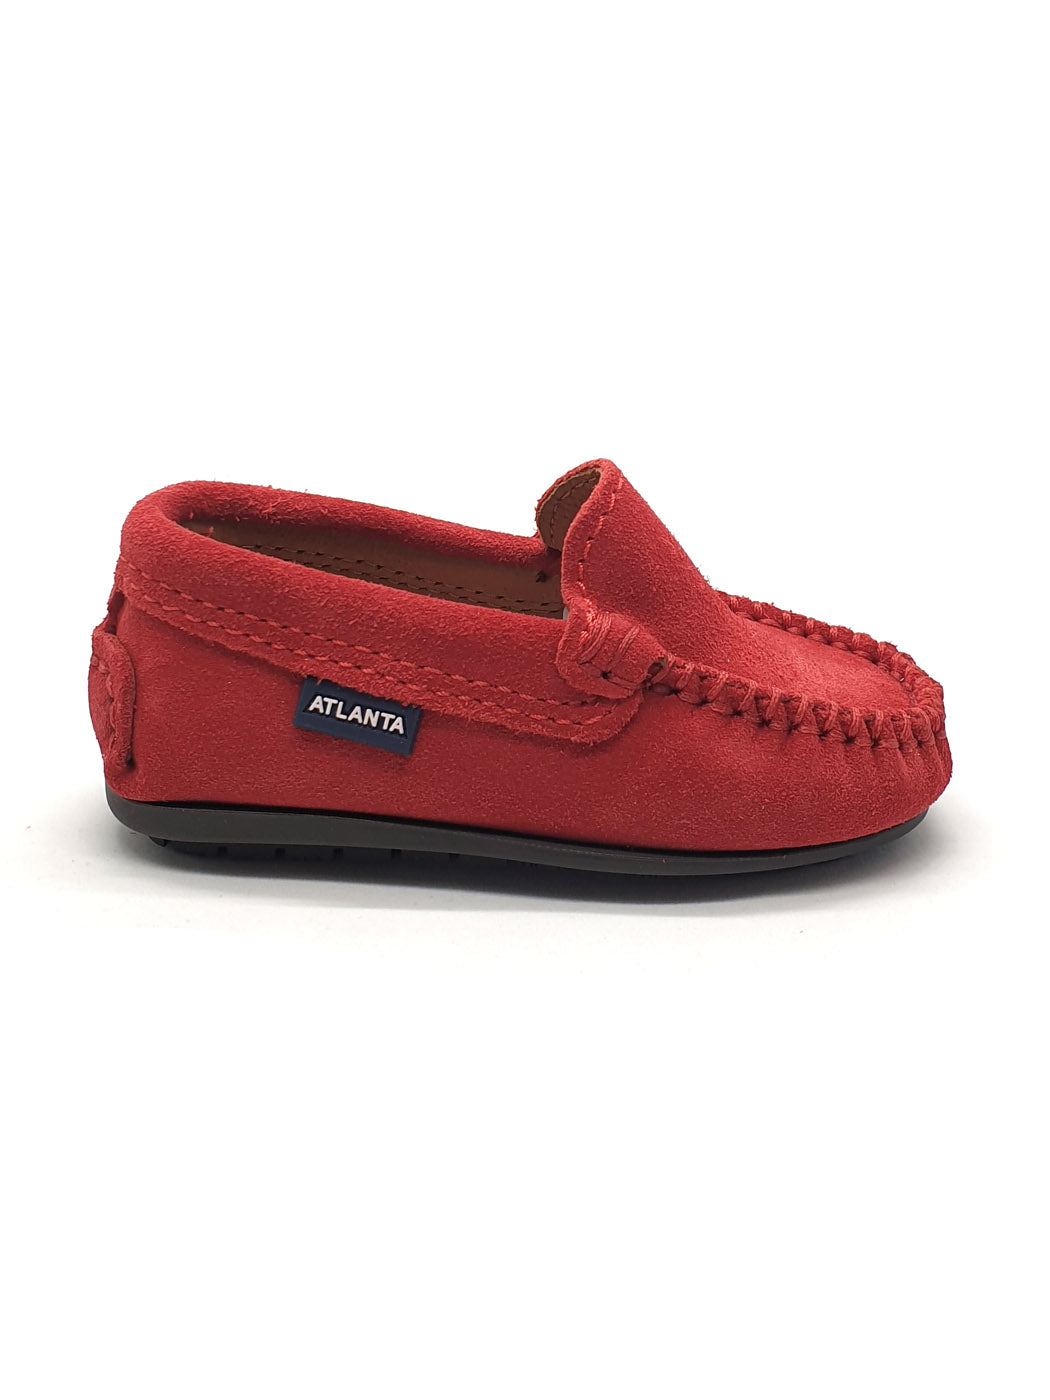 Atlanta Mocassin- Baby Shoes Moccasins Red-15G199